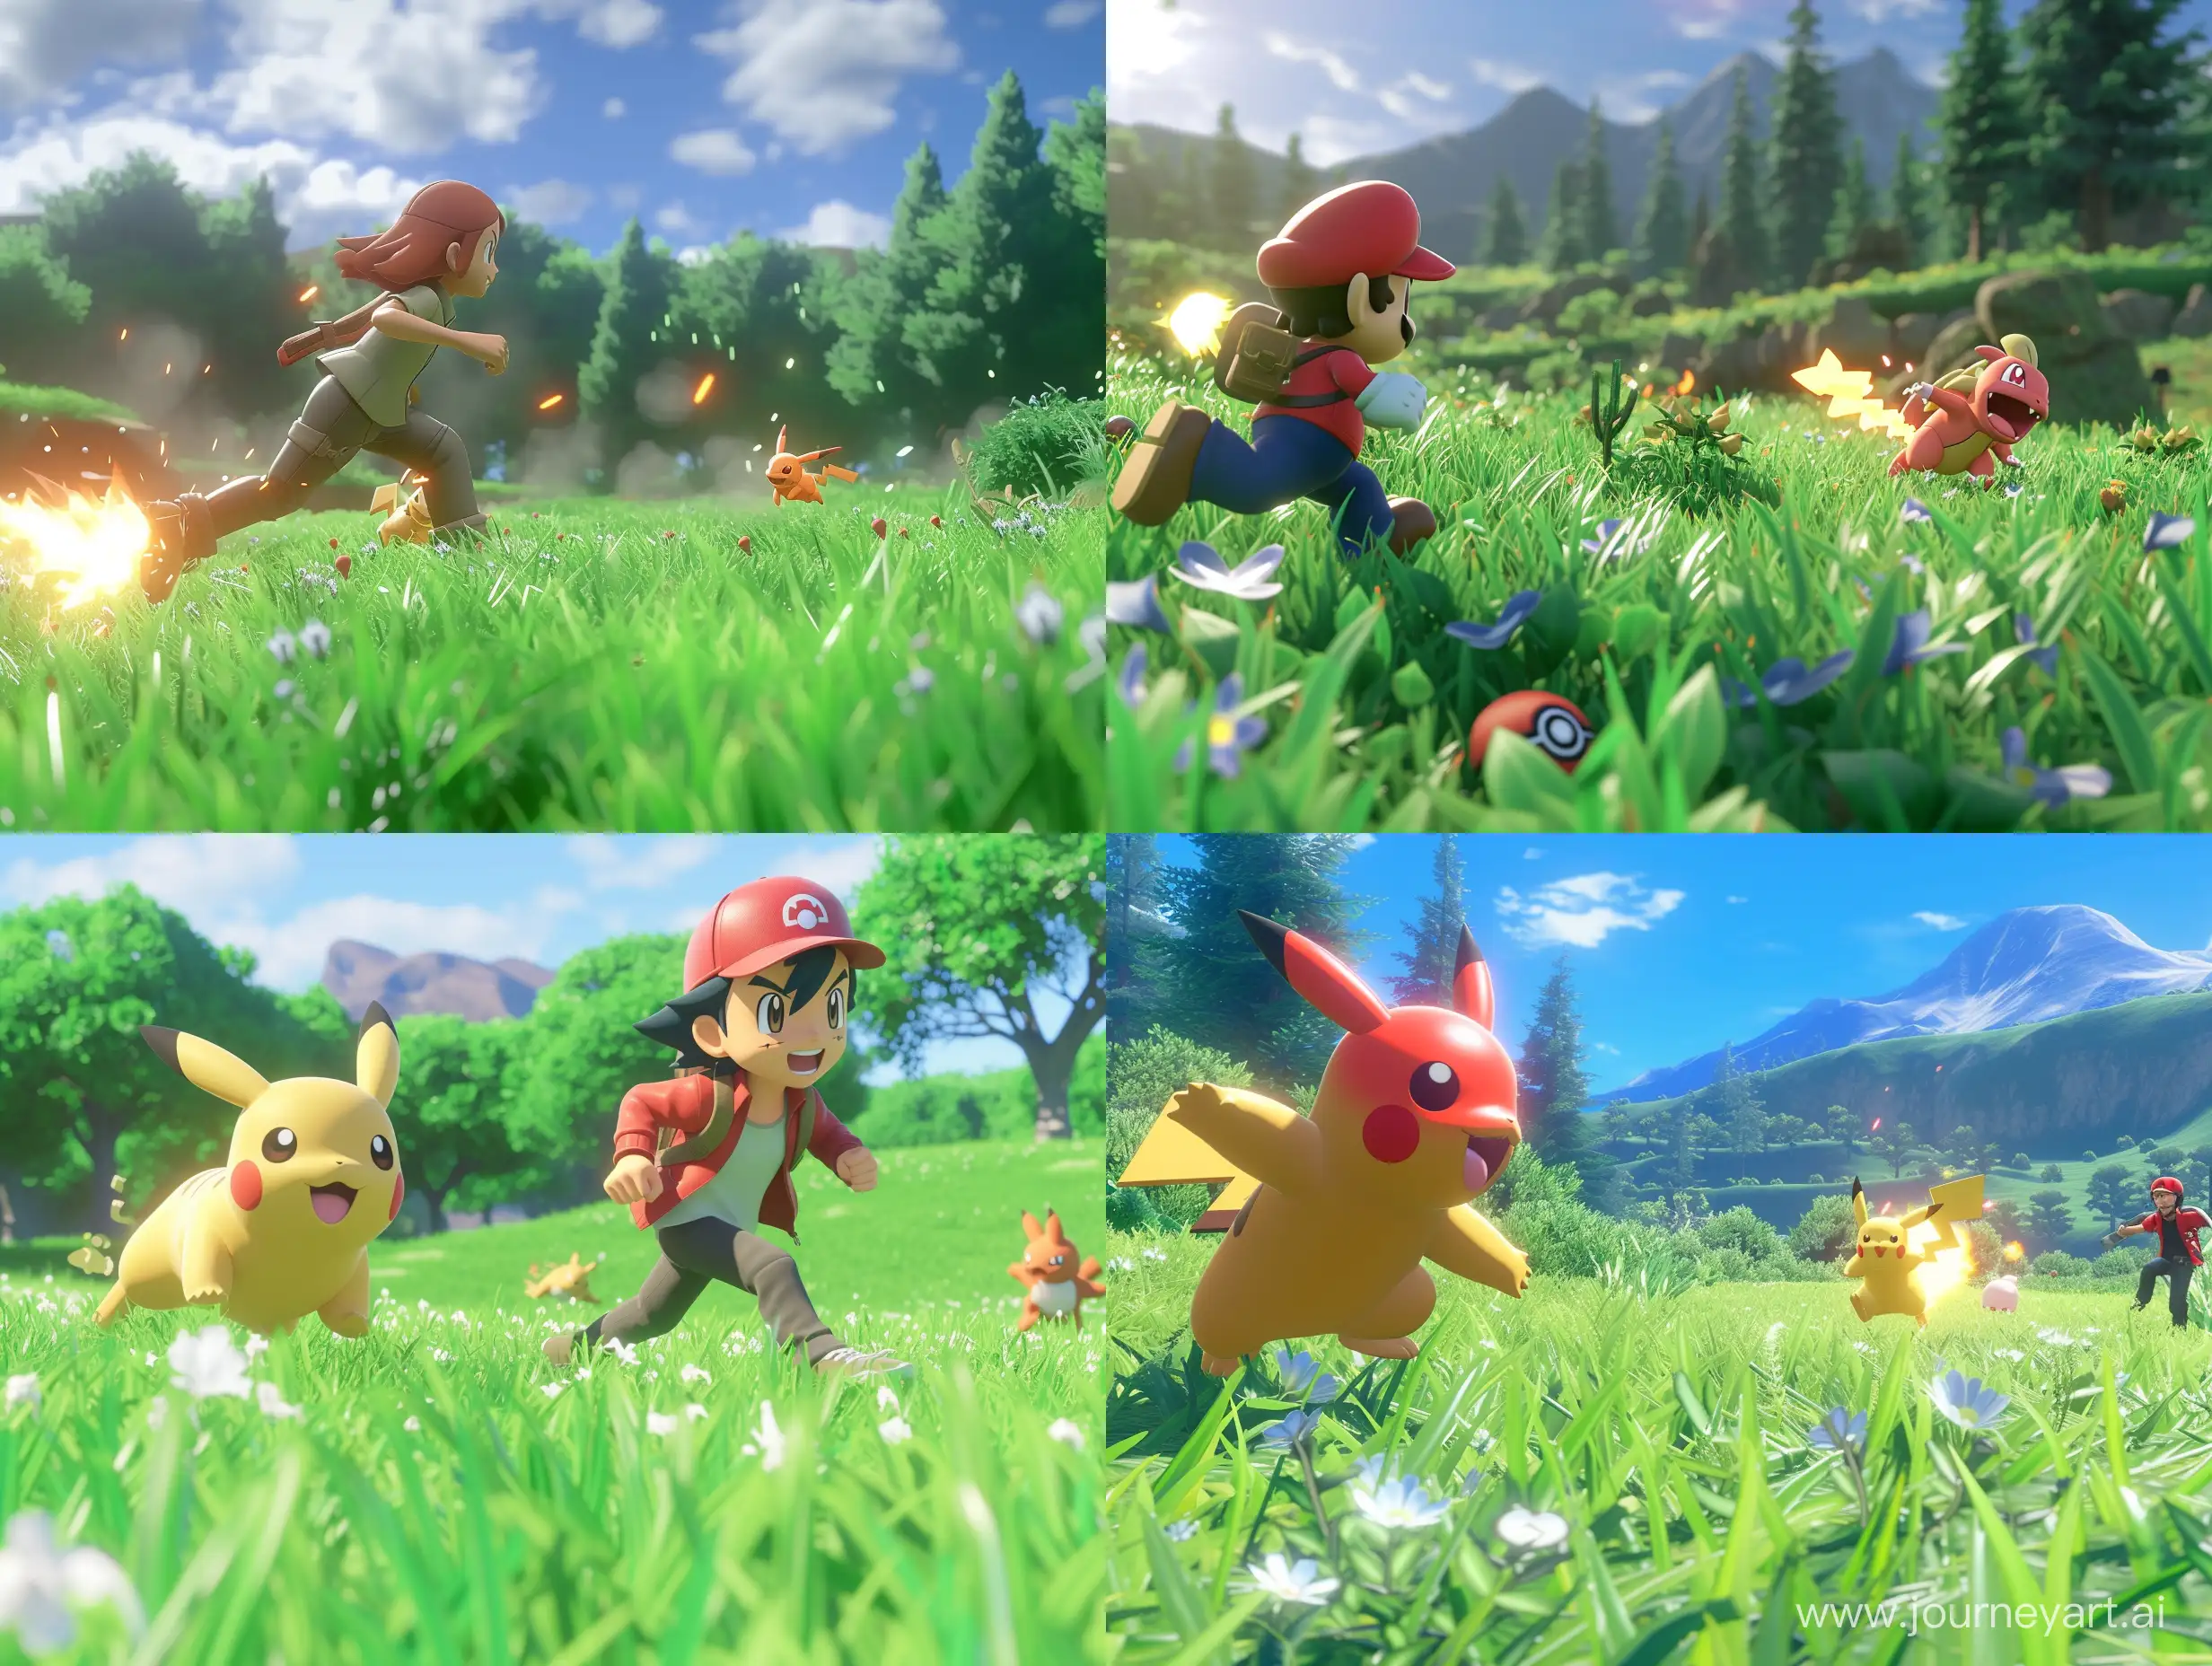 Exciting-Pokemon-Nintendo-Switch-Game-Screenshot-Animated-Character-Running-and-Epic-Pokemon-Battles